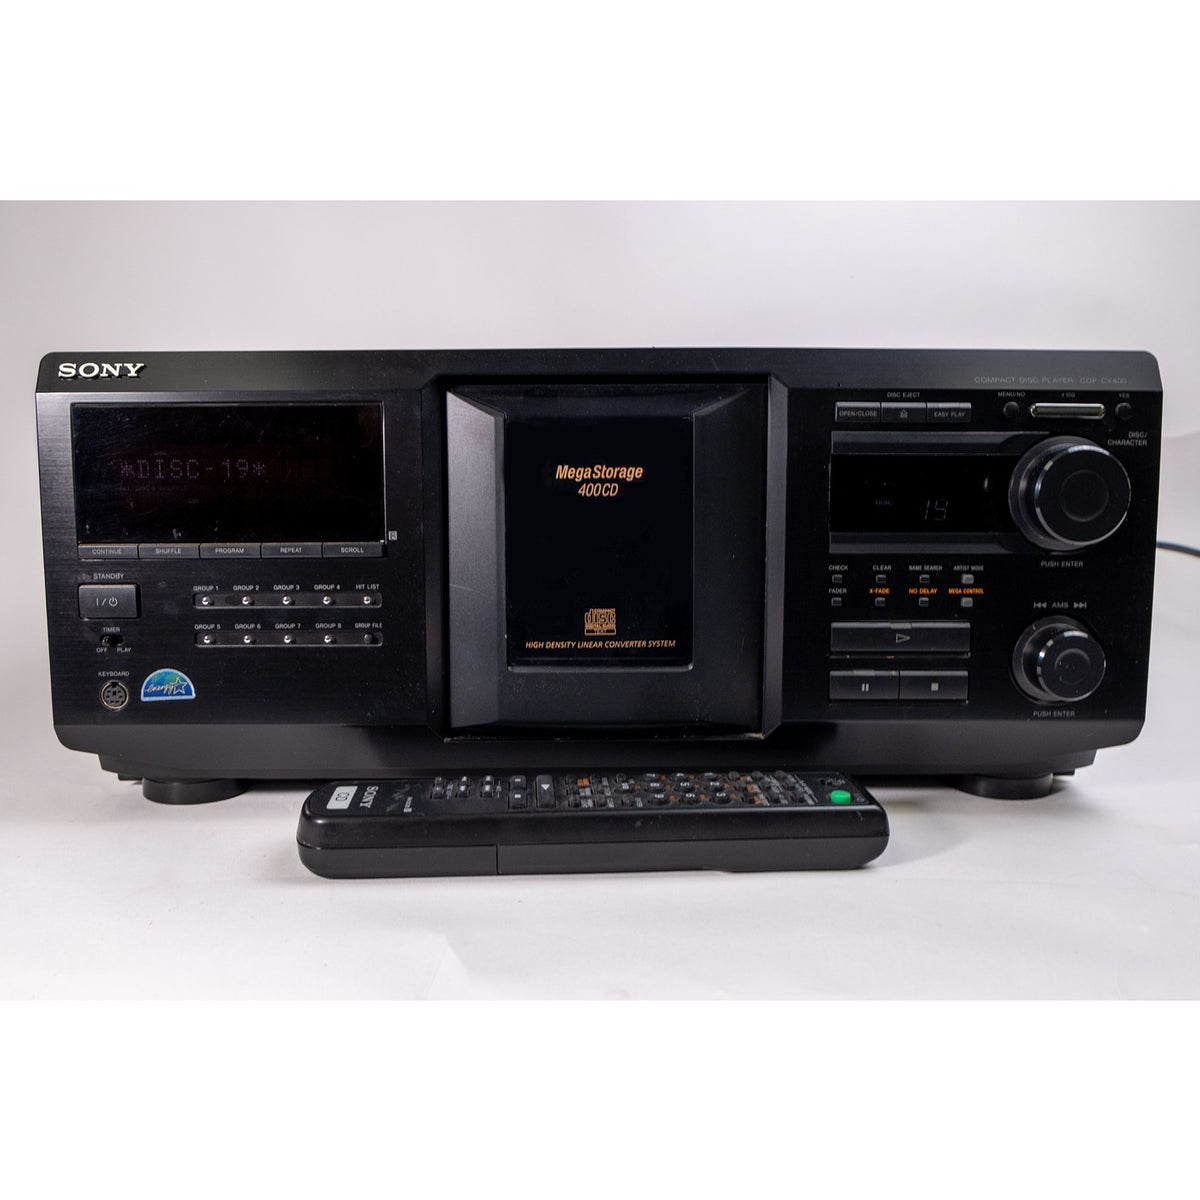 Sony CDP-CX400 Mega Storage 400CD Player